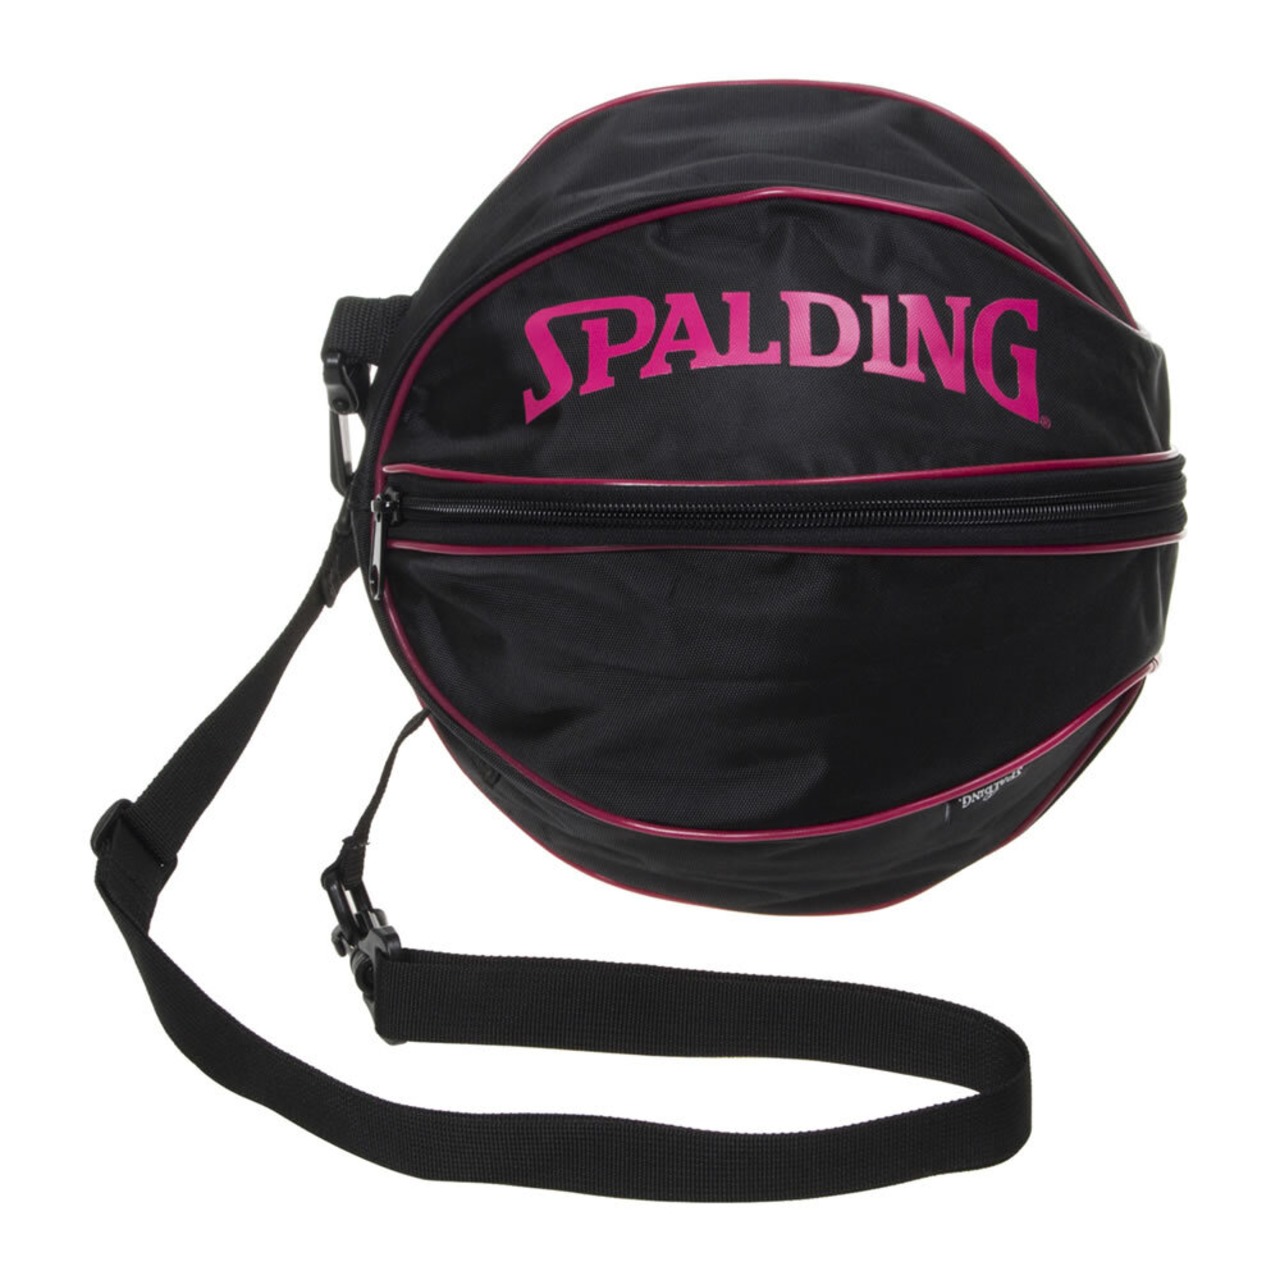 【SPALDING】ボールバッグ ピンク